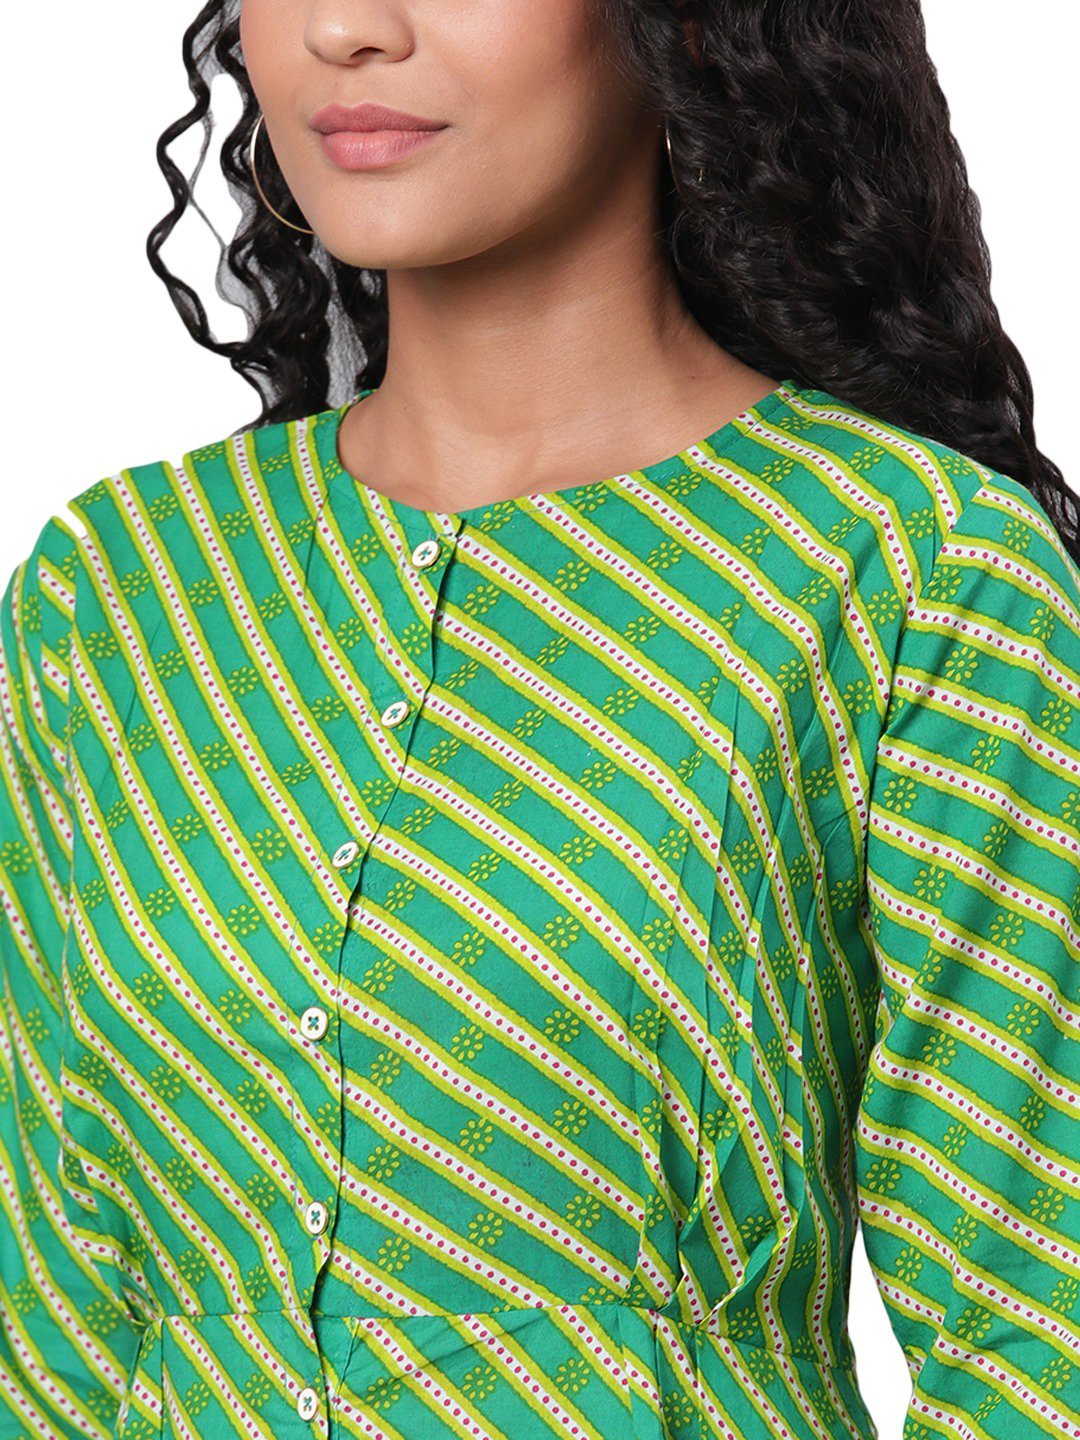 Women's Green Printed 3/4 Sleeve Cotton Round Neck Casual Dress - Myshka